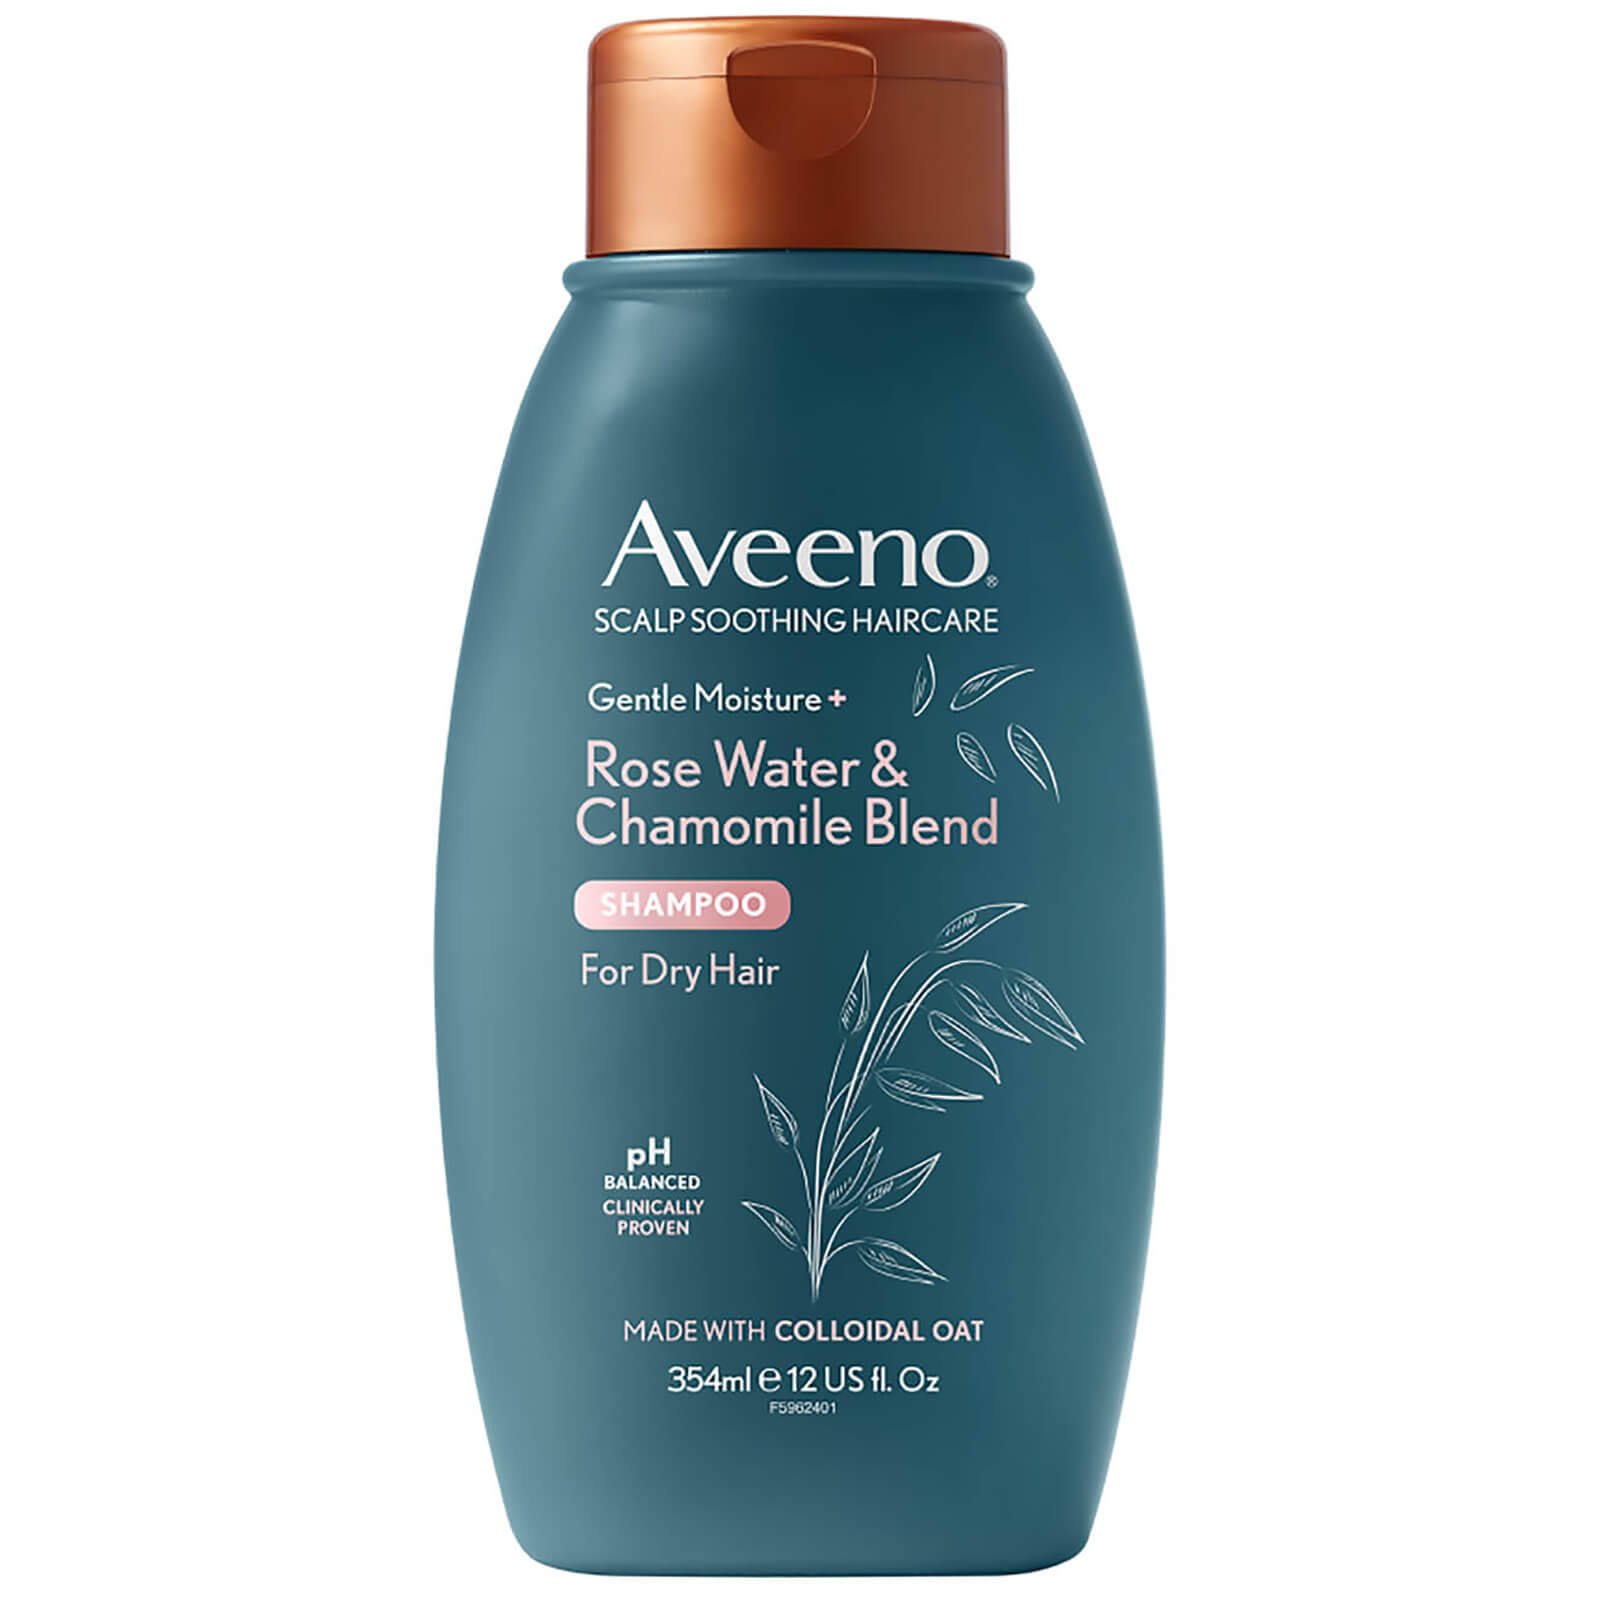 Aveeno Gentle Moisture Rose Water & Chamomile Blend Shampoo 354ml